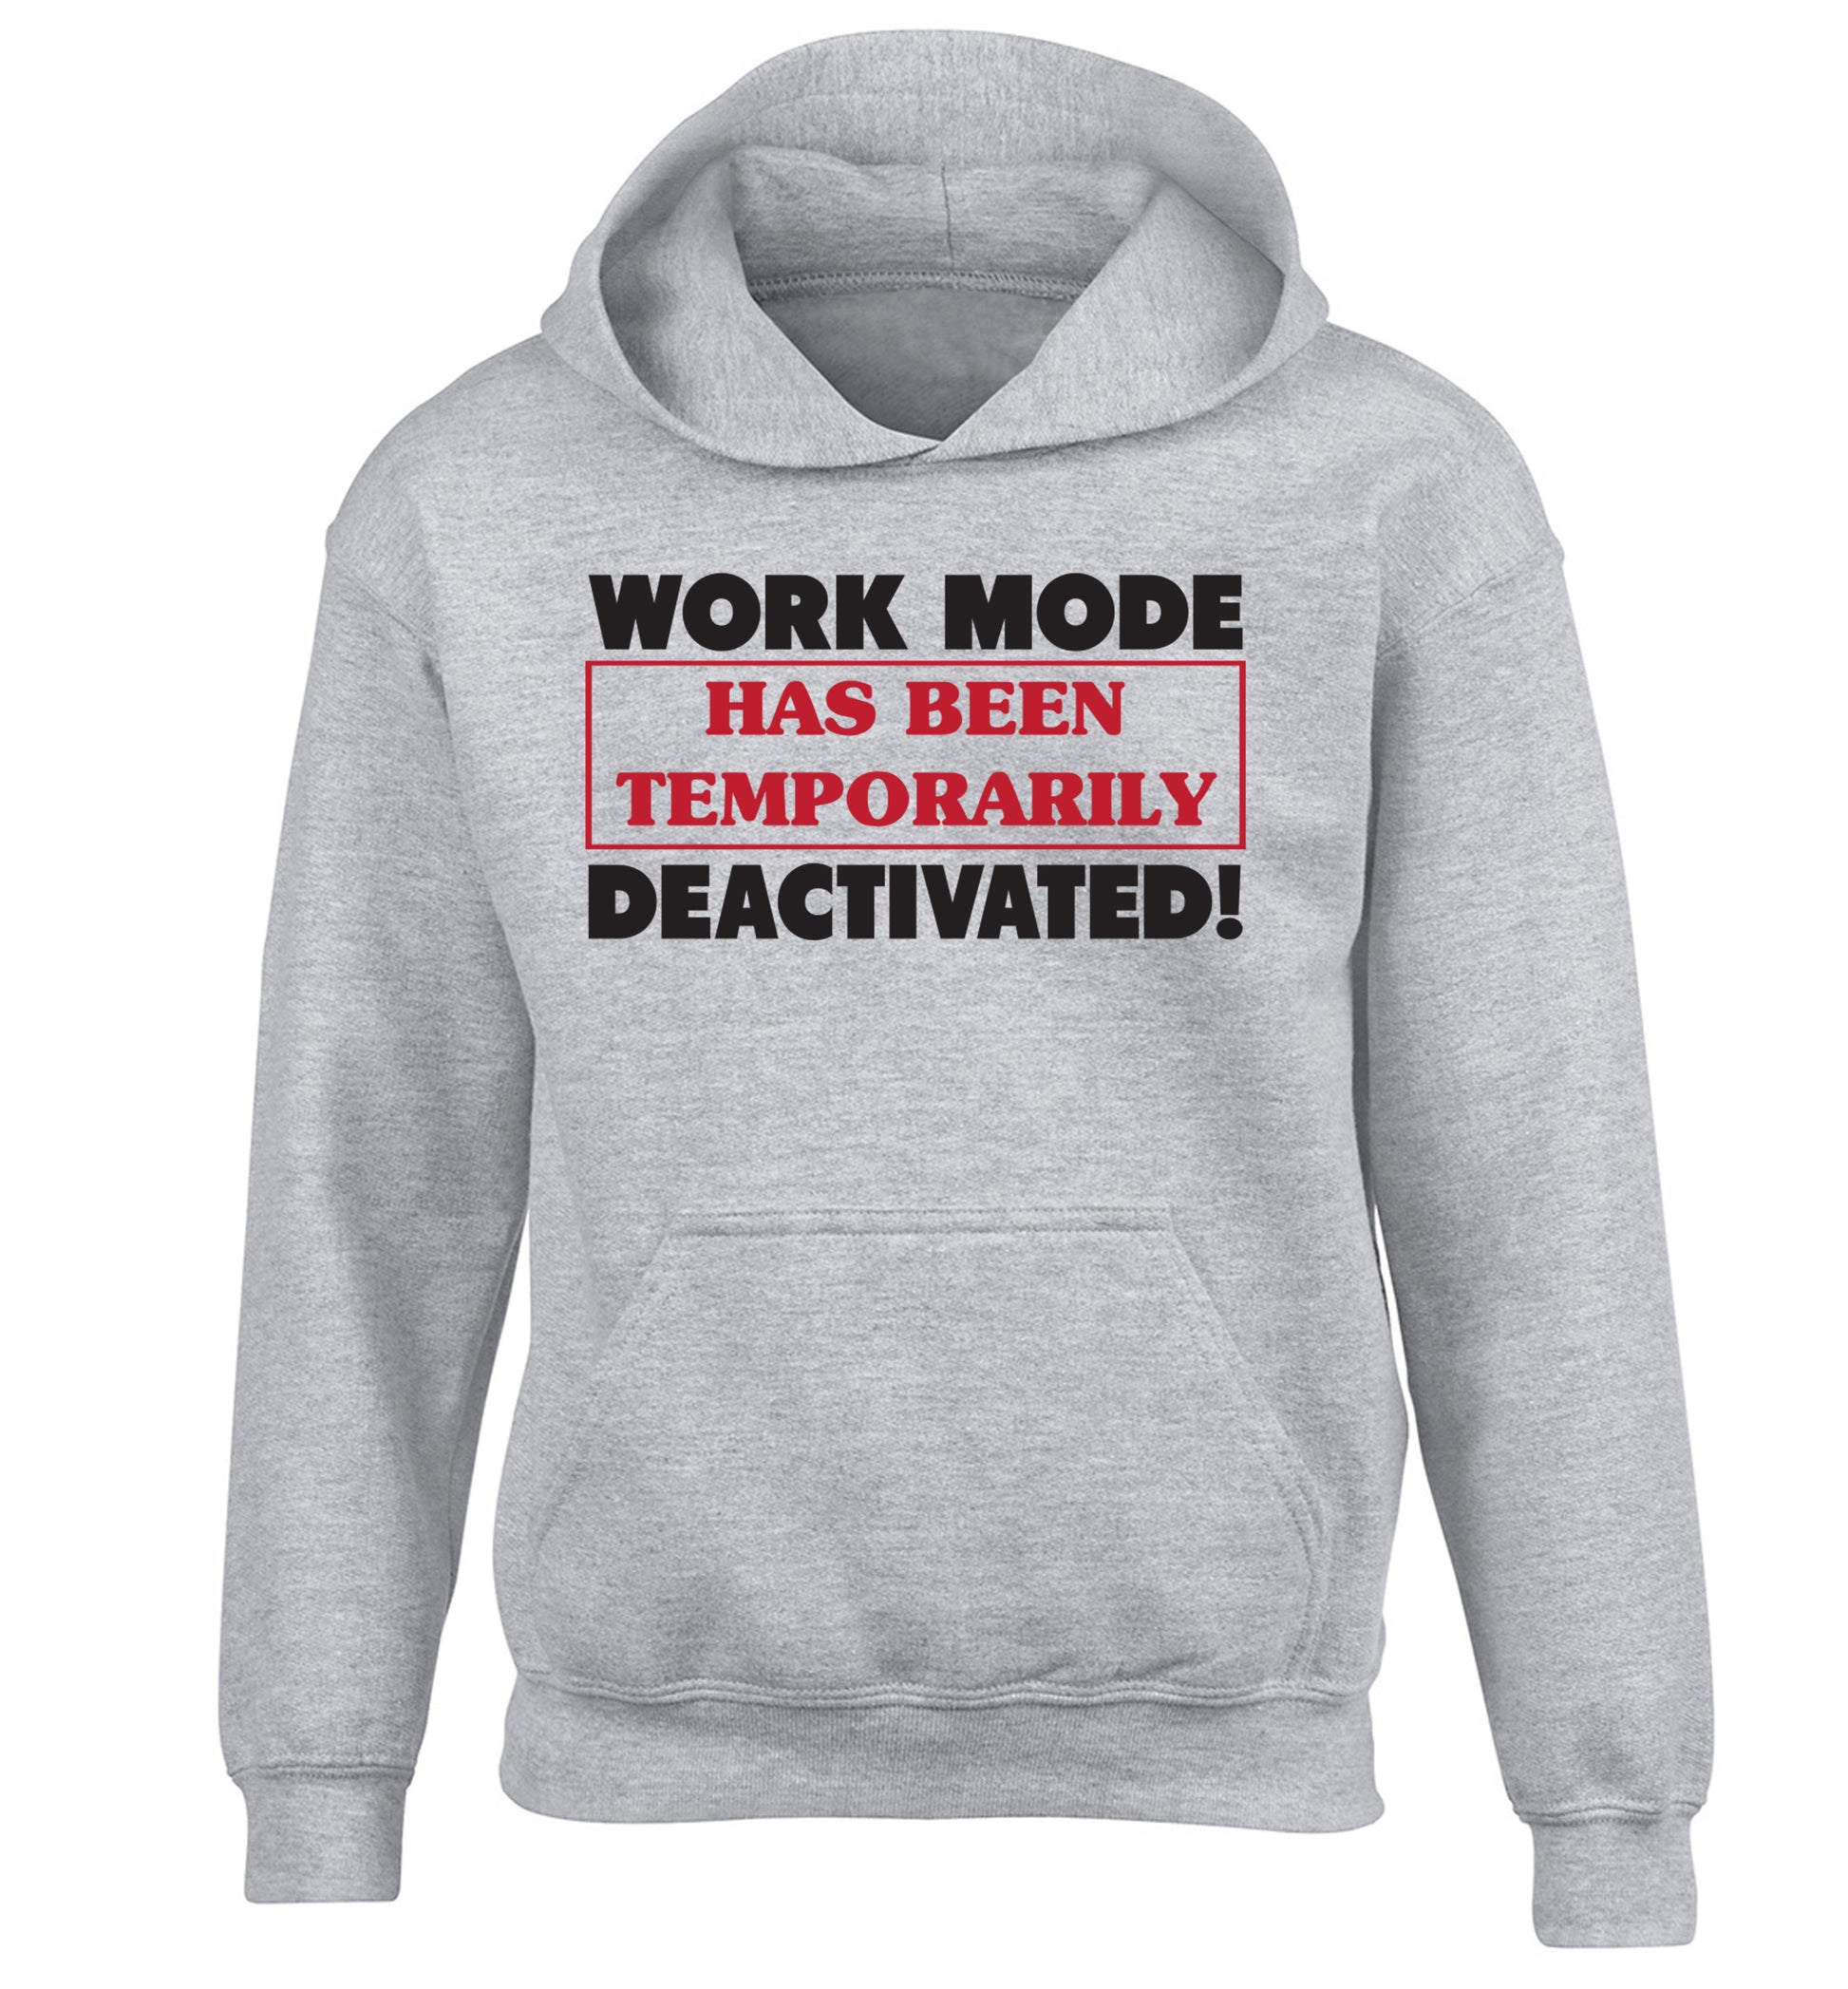 Work mode has now been temporarily deactivated children's grey hoodie 12-13 Years